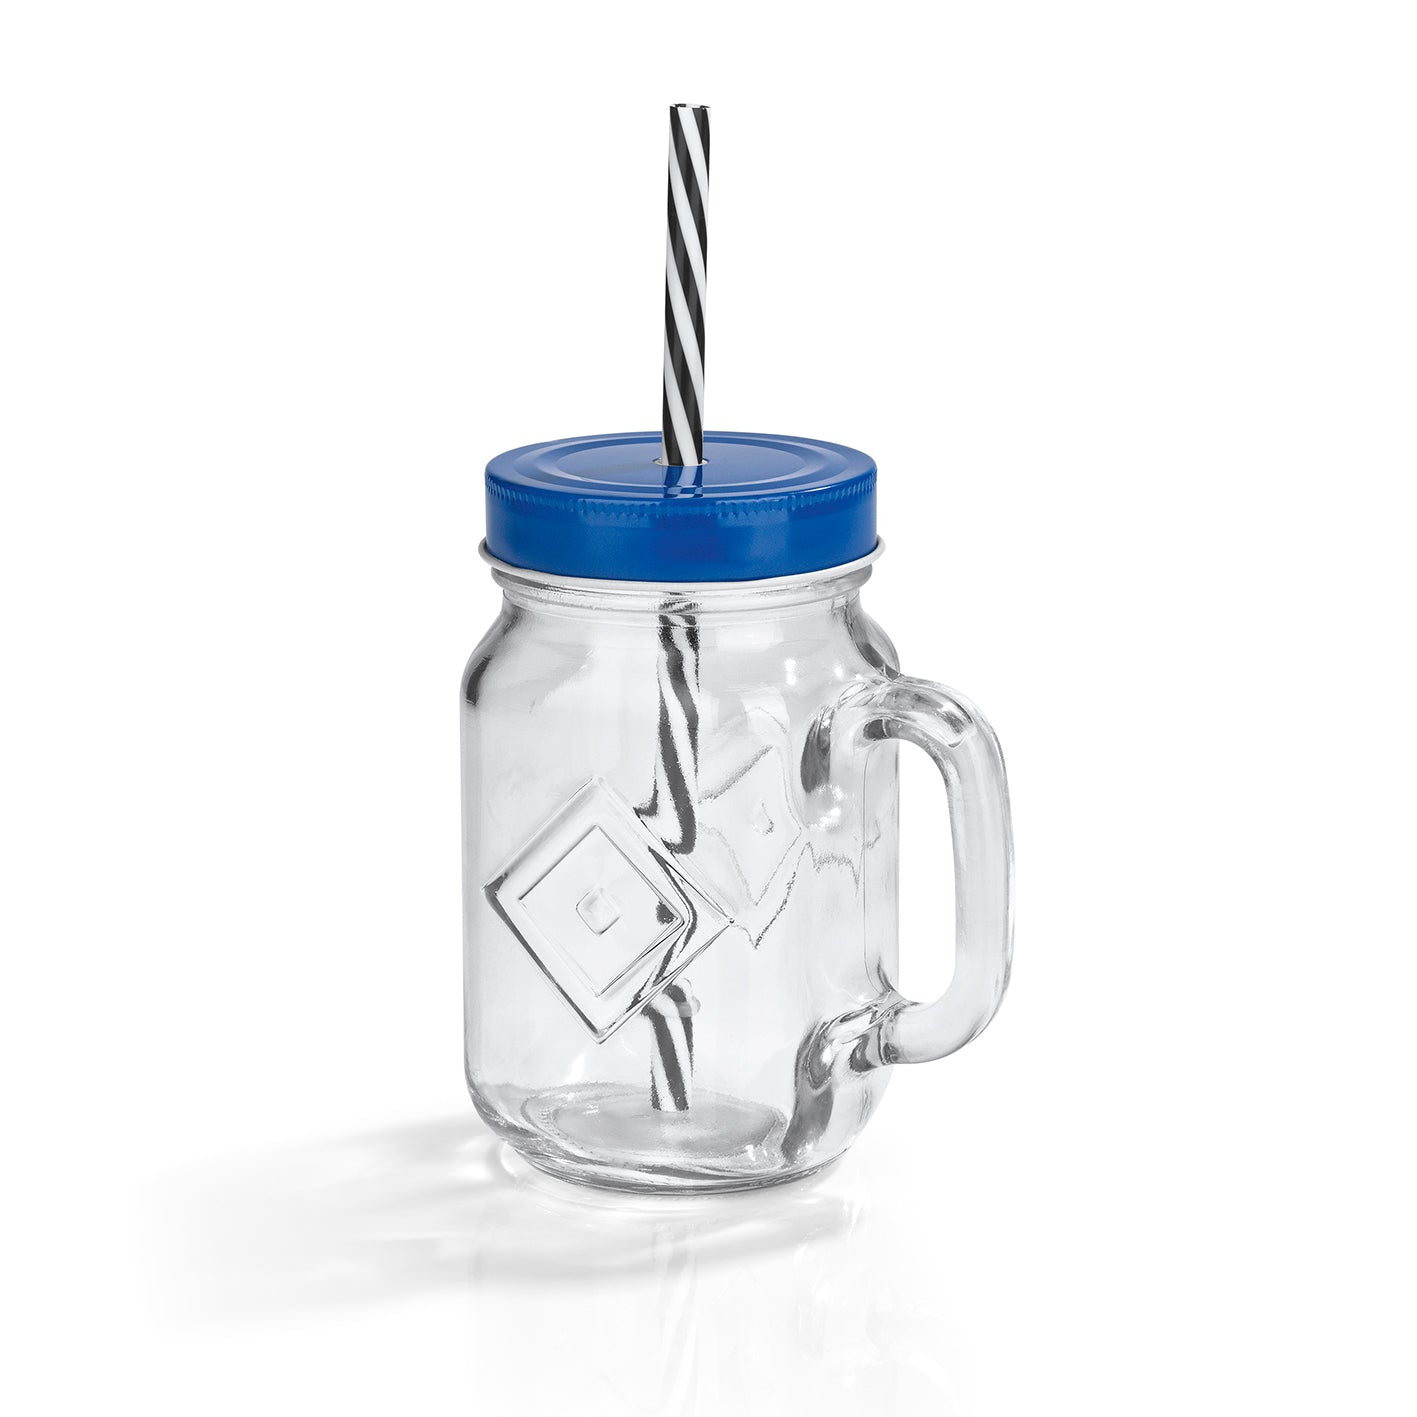 Trinkglas mit Strohhalm - 450 ml